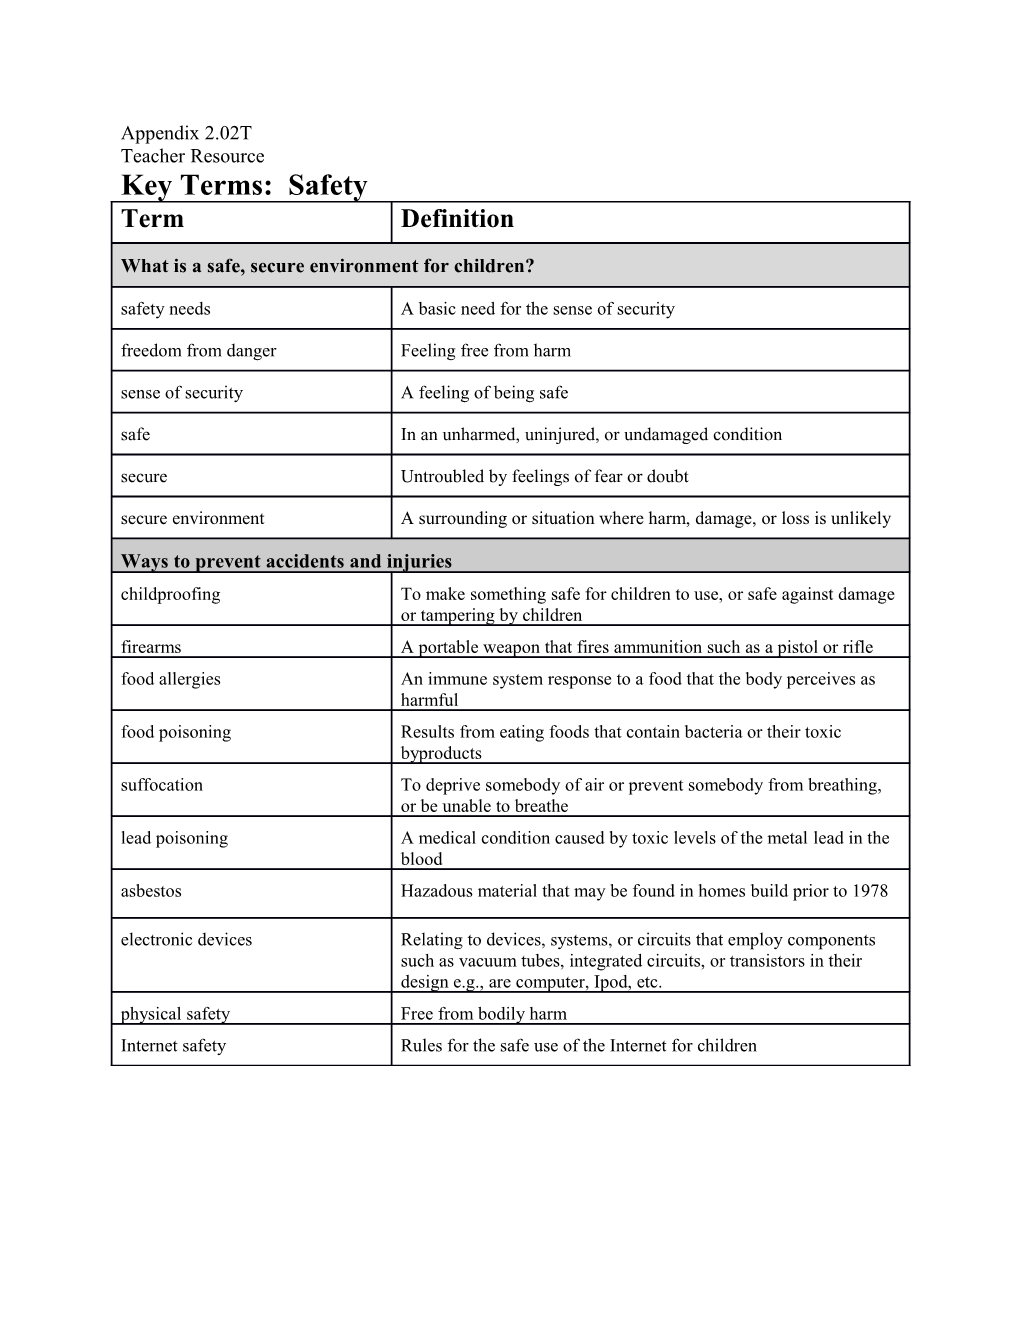 Key Terms: Safety